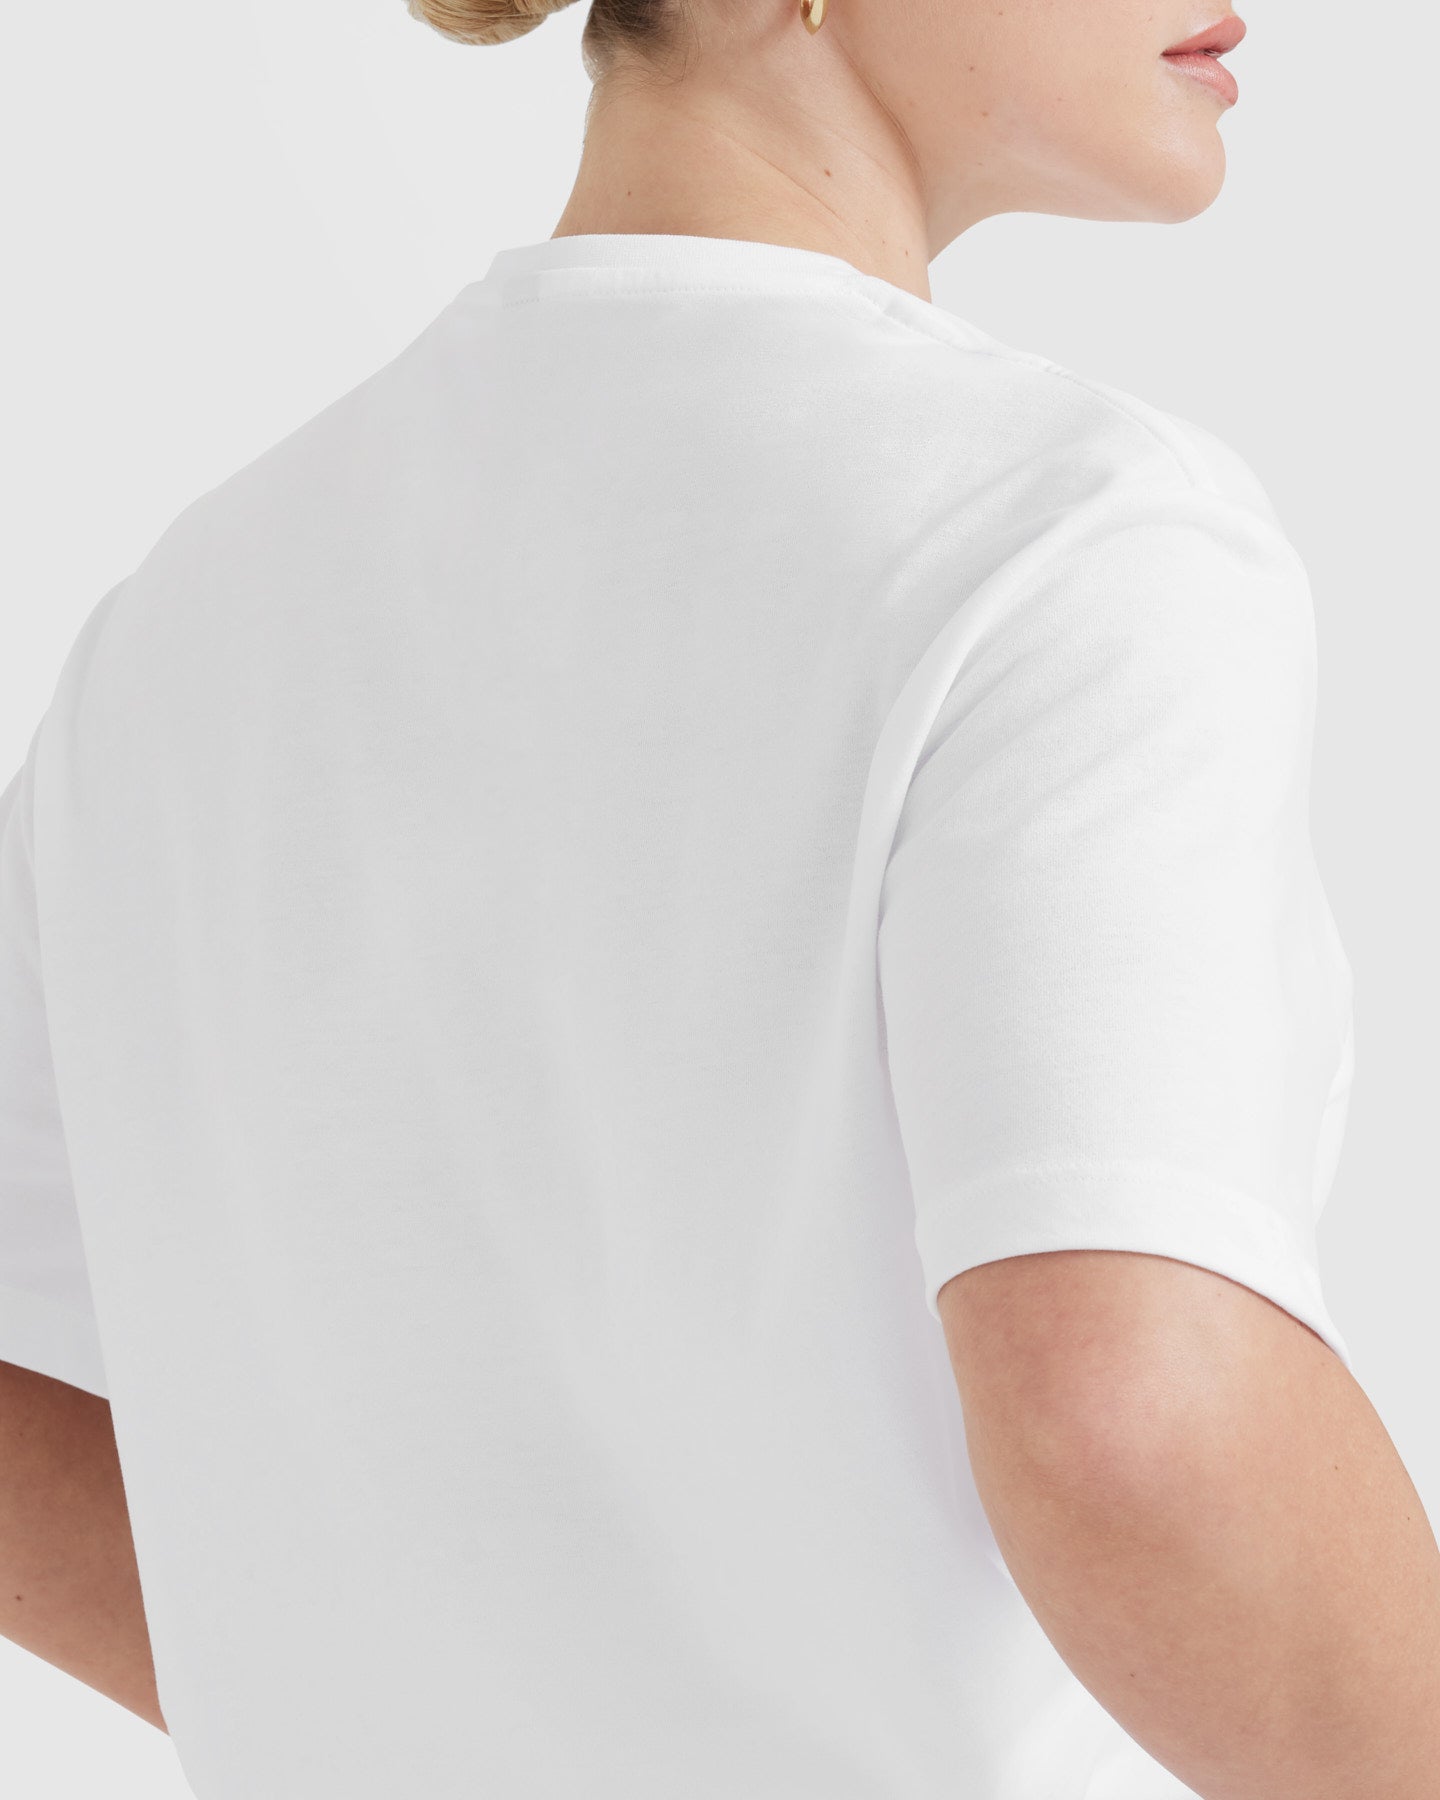 White Oversized T-Shirt Women's - Lightweight Fabric